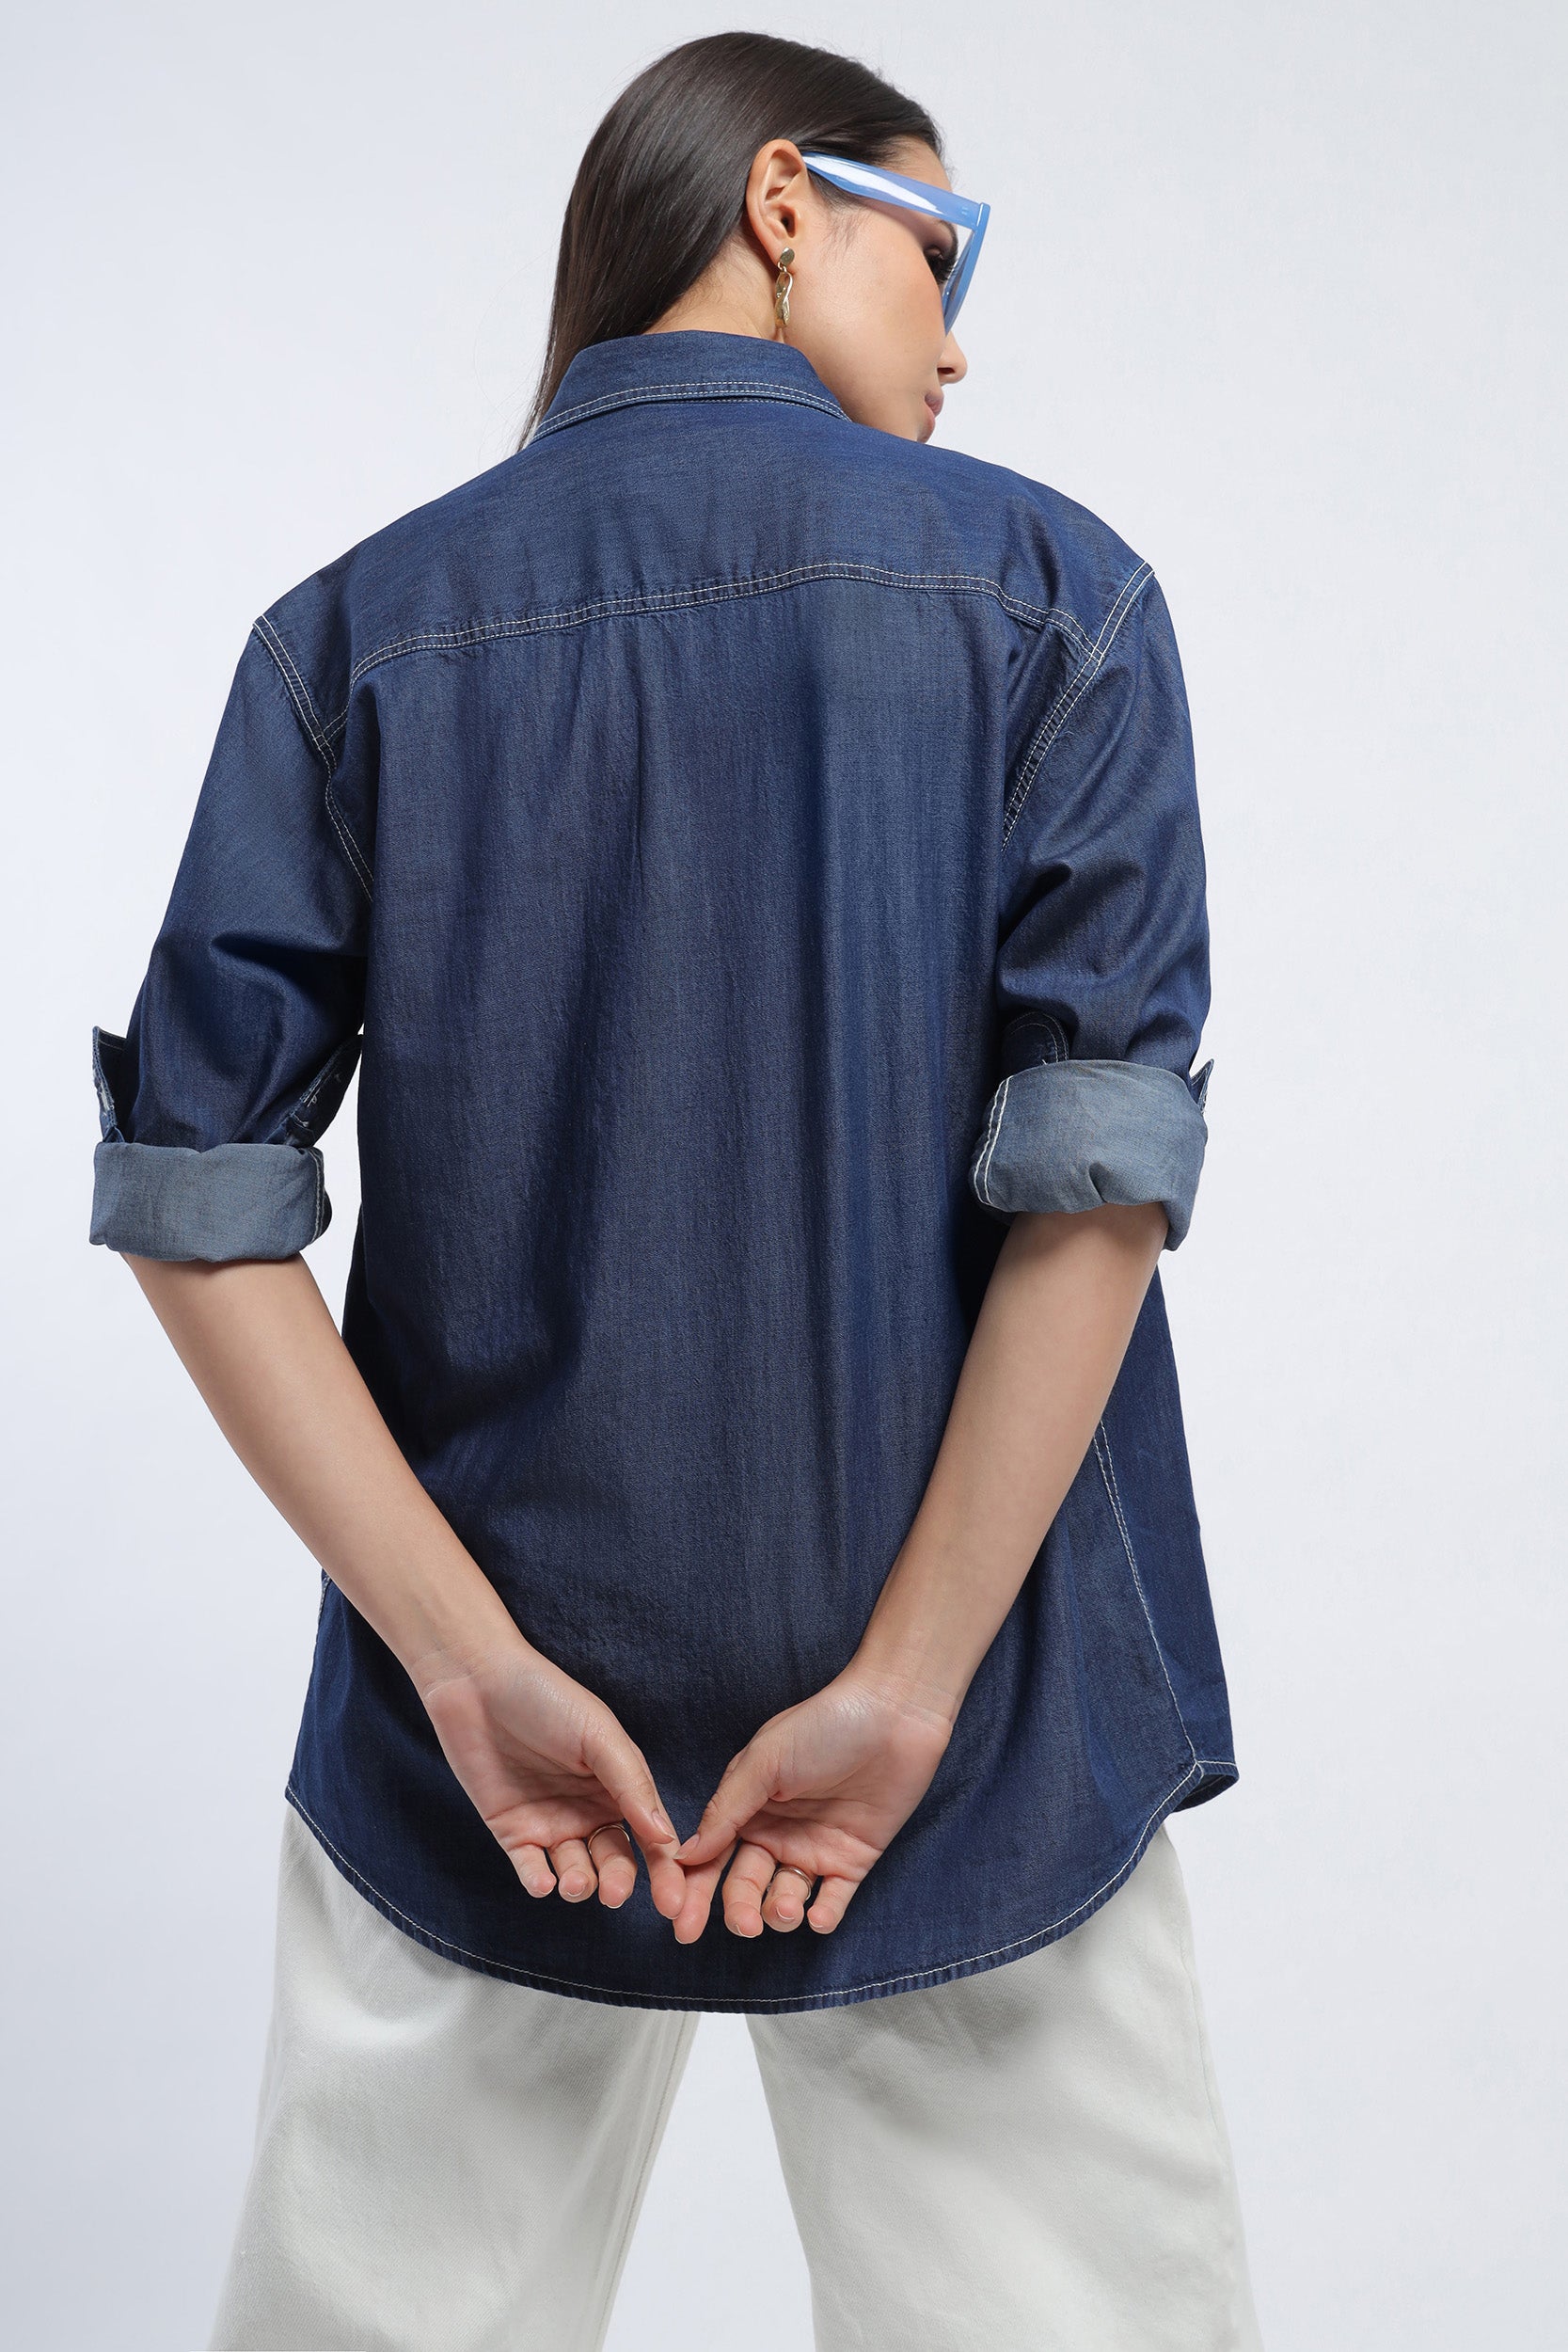 Buy Yunloo Women's Ladies Long Sleeve Denim Shirt S-XL Blue at Amazon.in